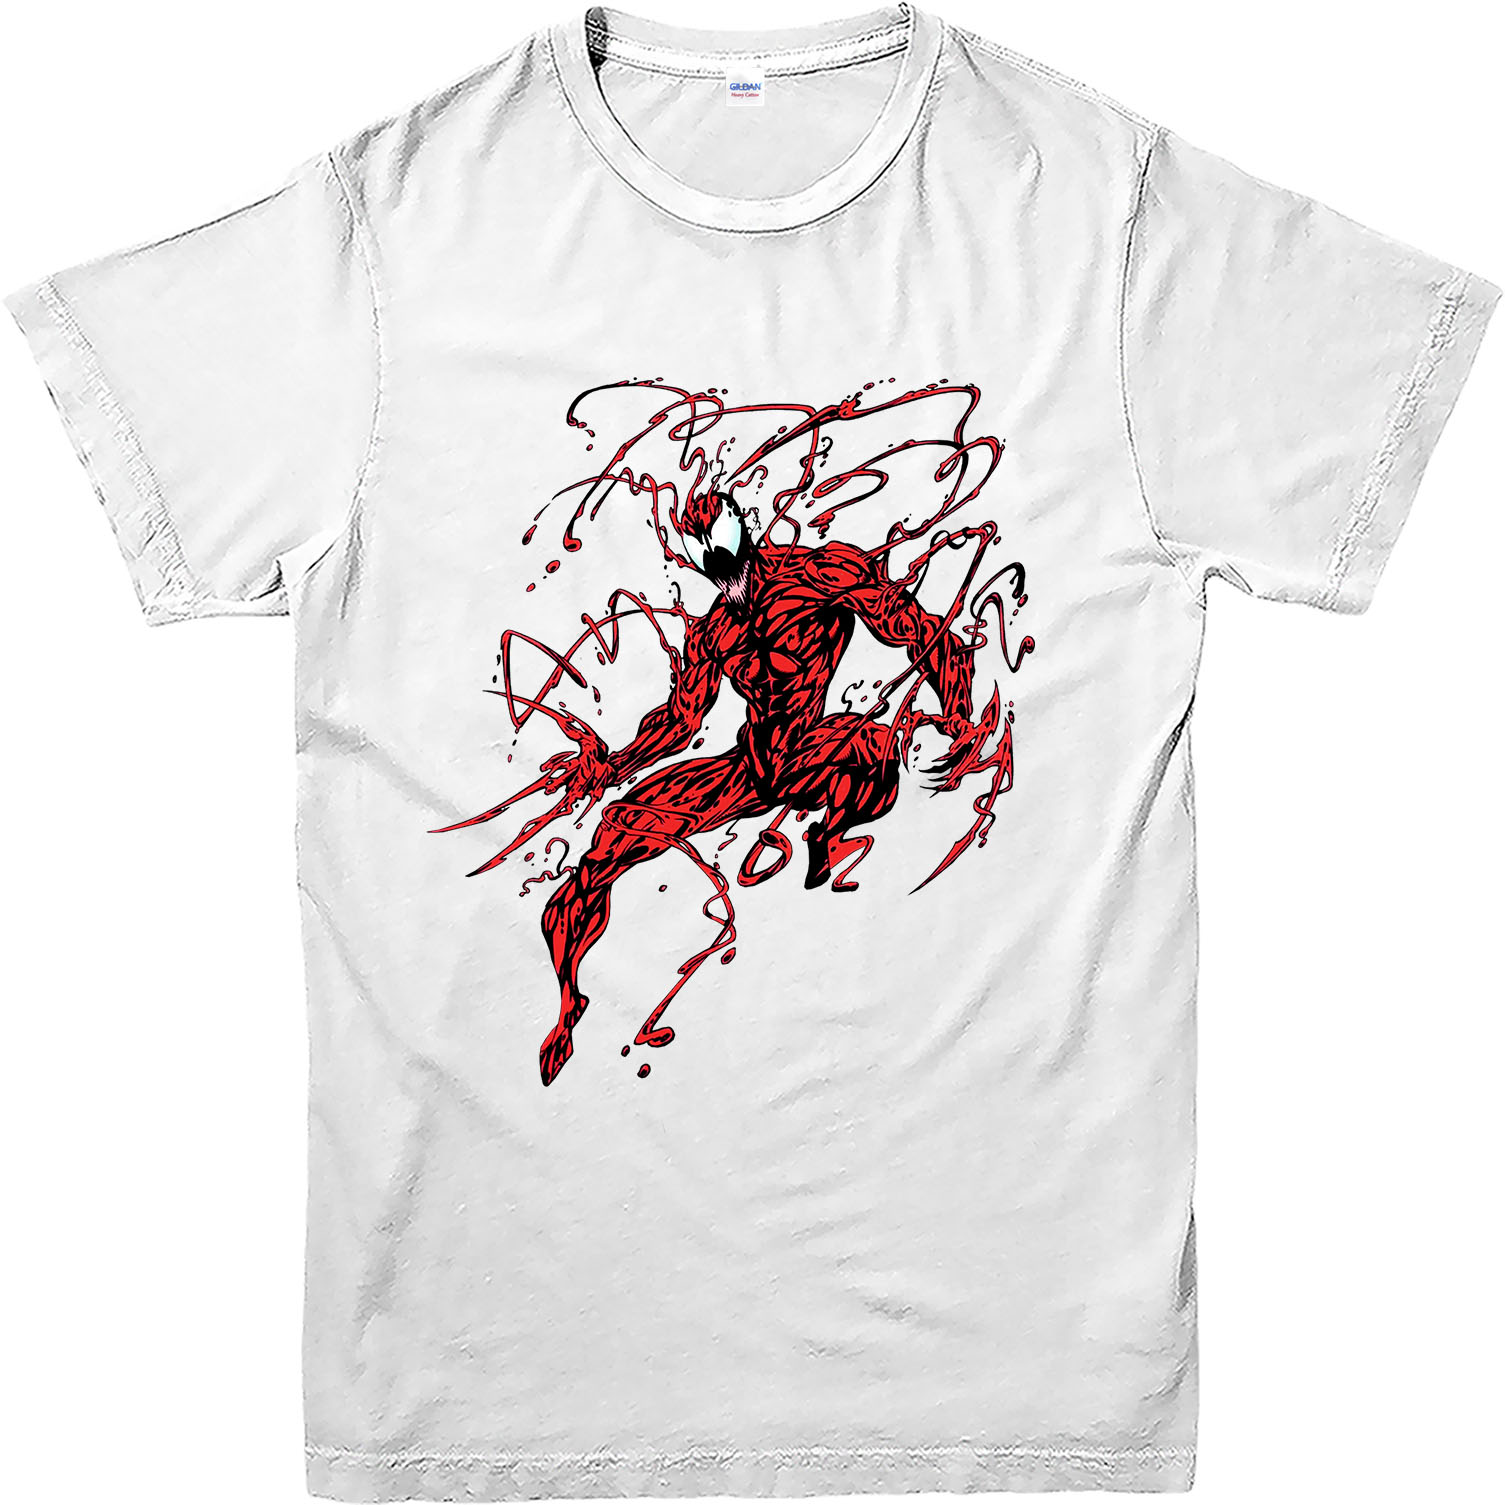 Spiderman T-Shirt, Crazy Carnage T-Shirt, Marvel Superhero | eBay